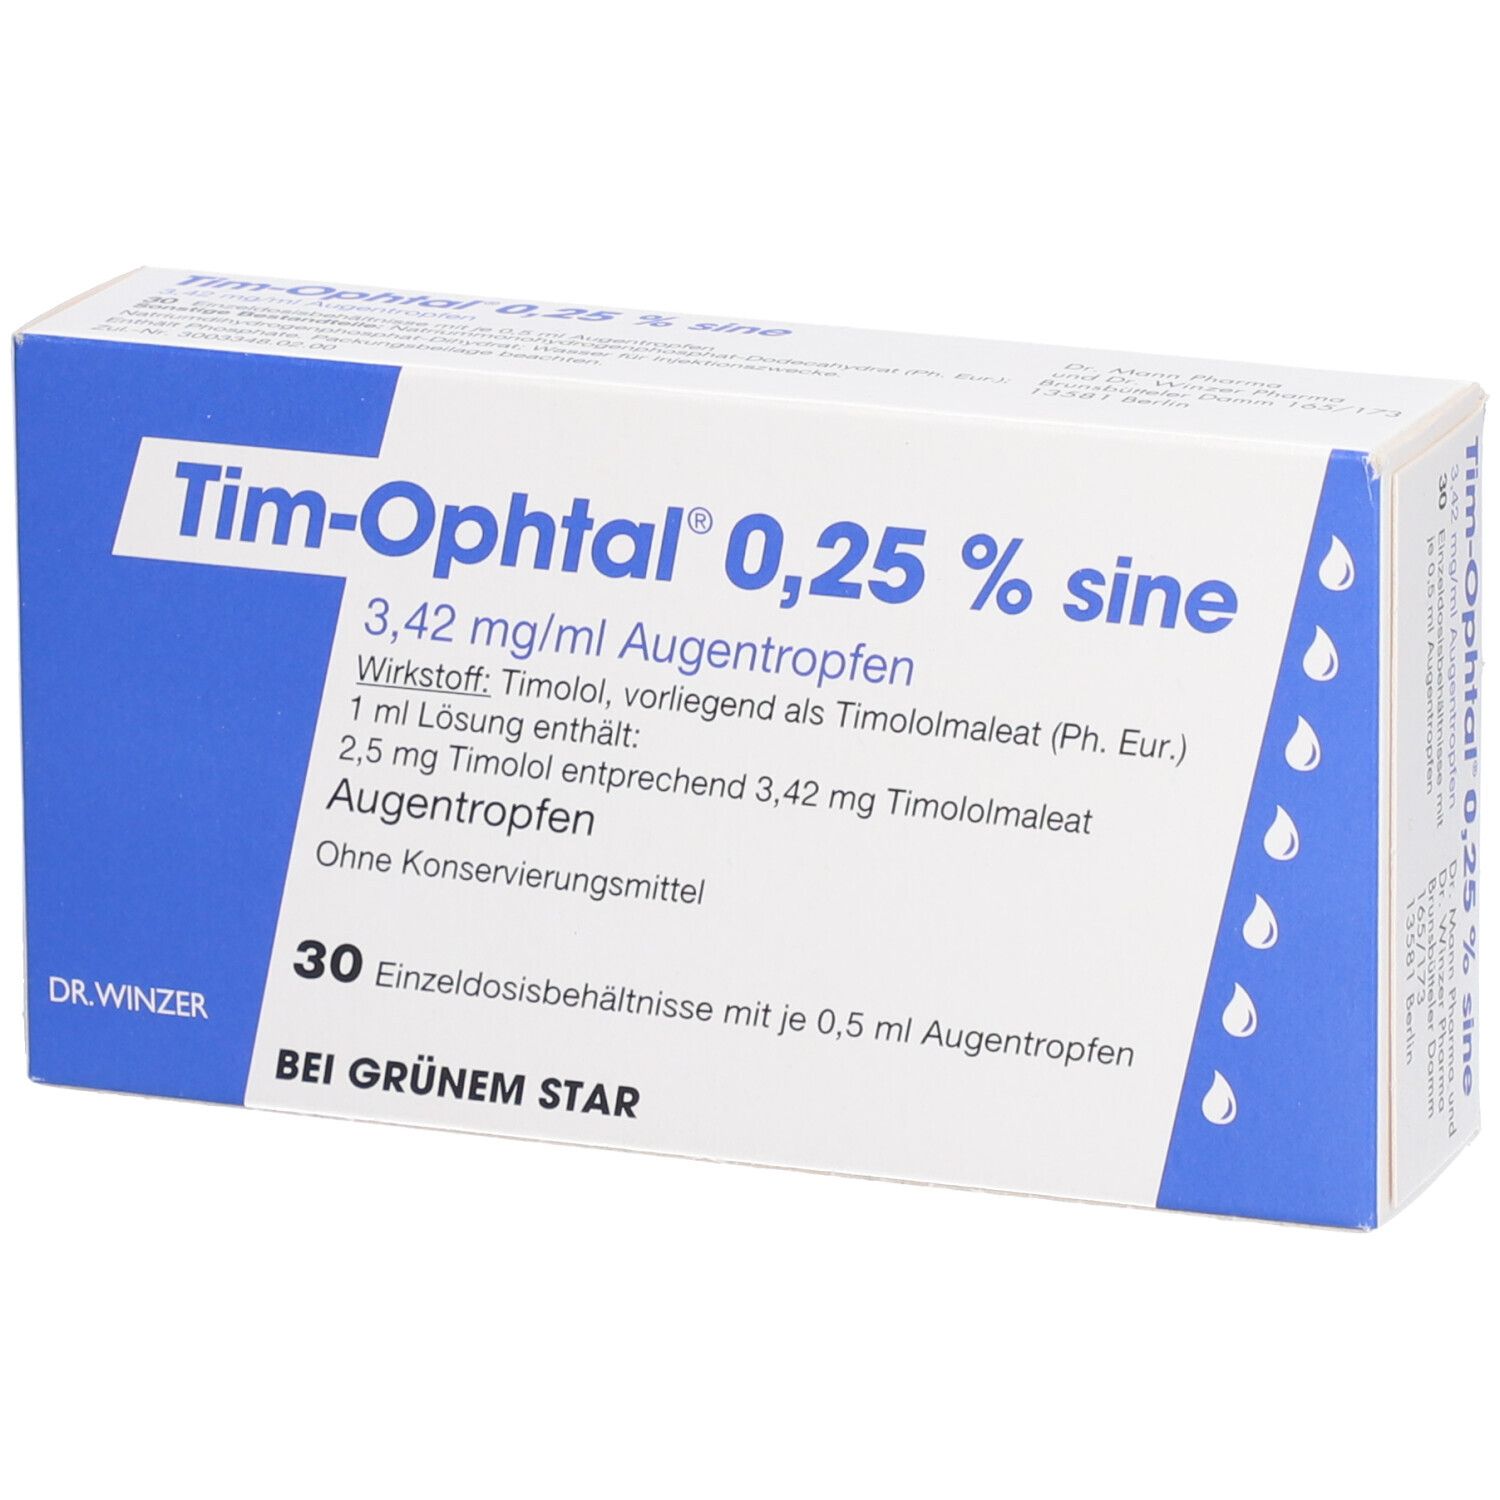 Tim®-Ophtal® 0,25 % sine